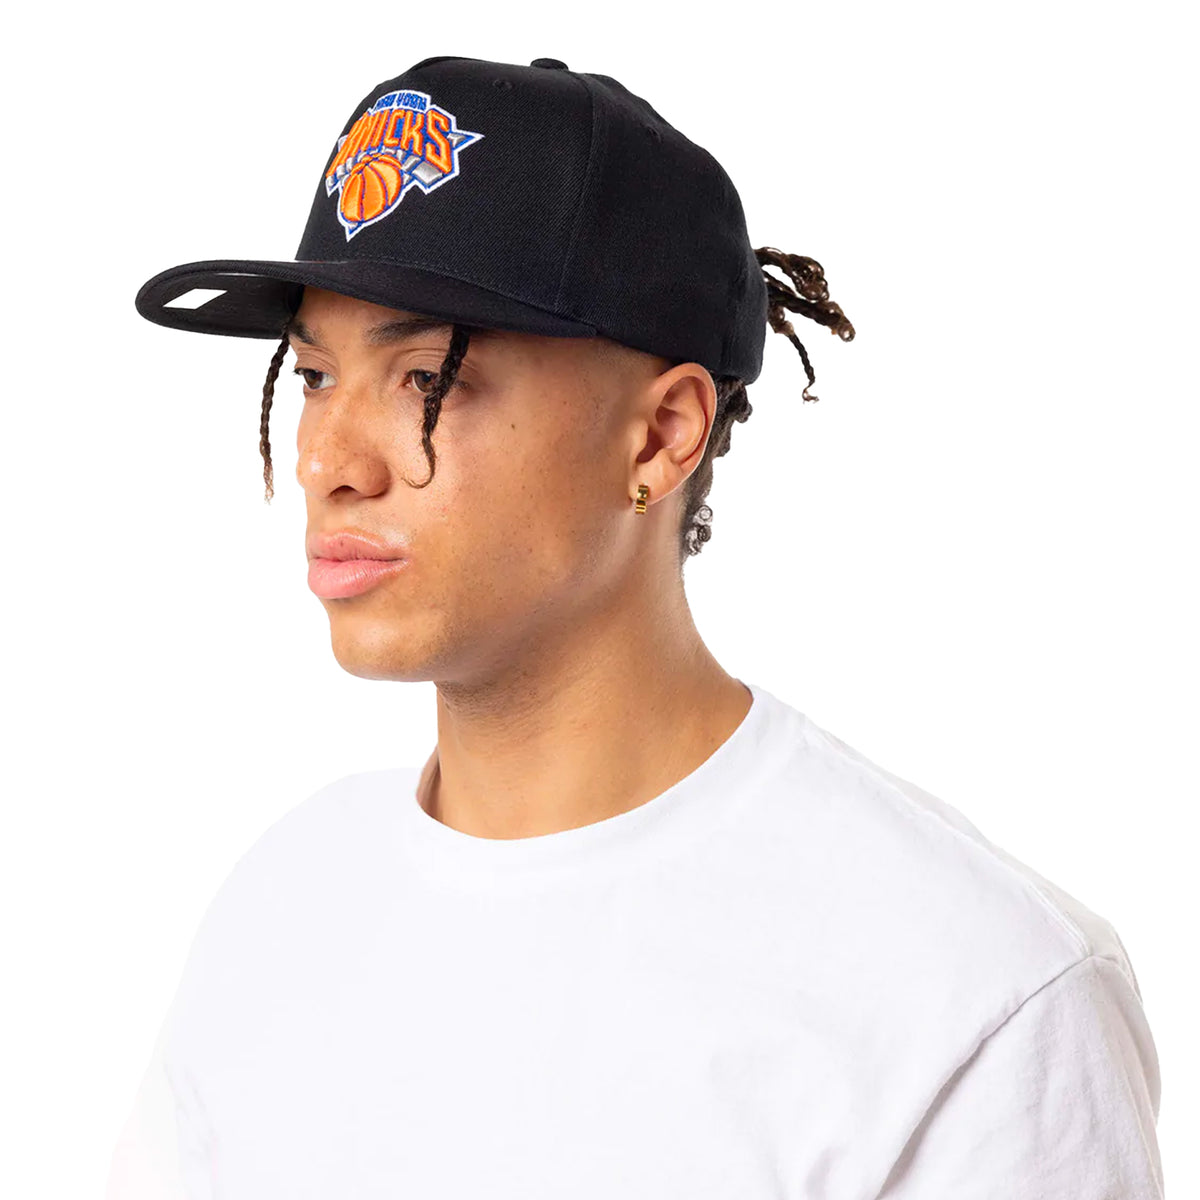 New York Knicks Colour Team Logo Classic Redline Snapback - Throwback